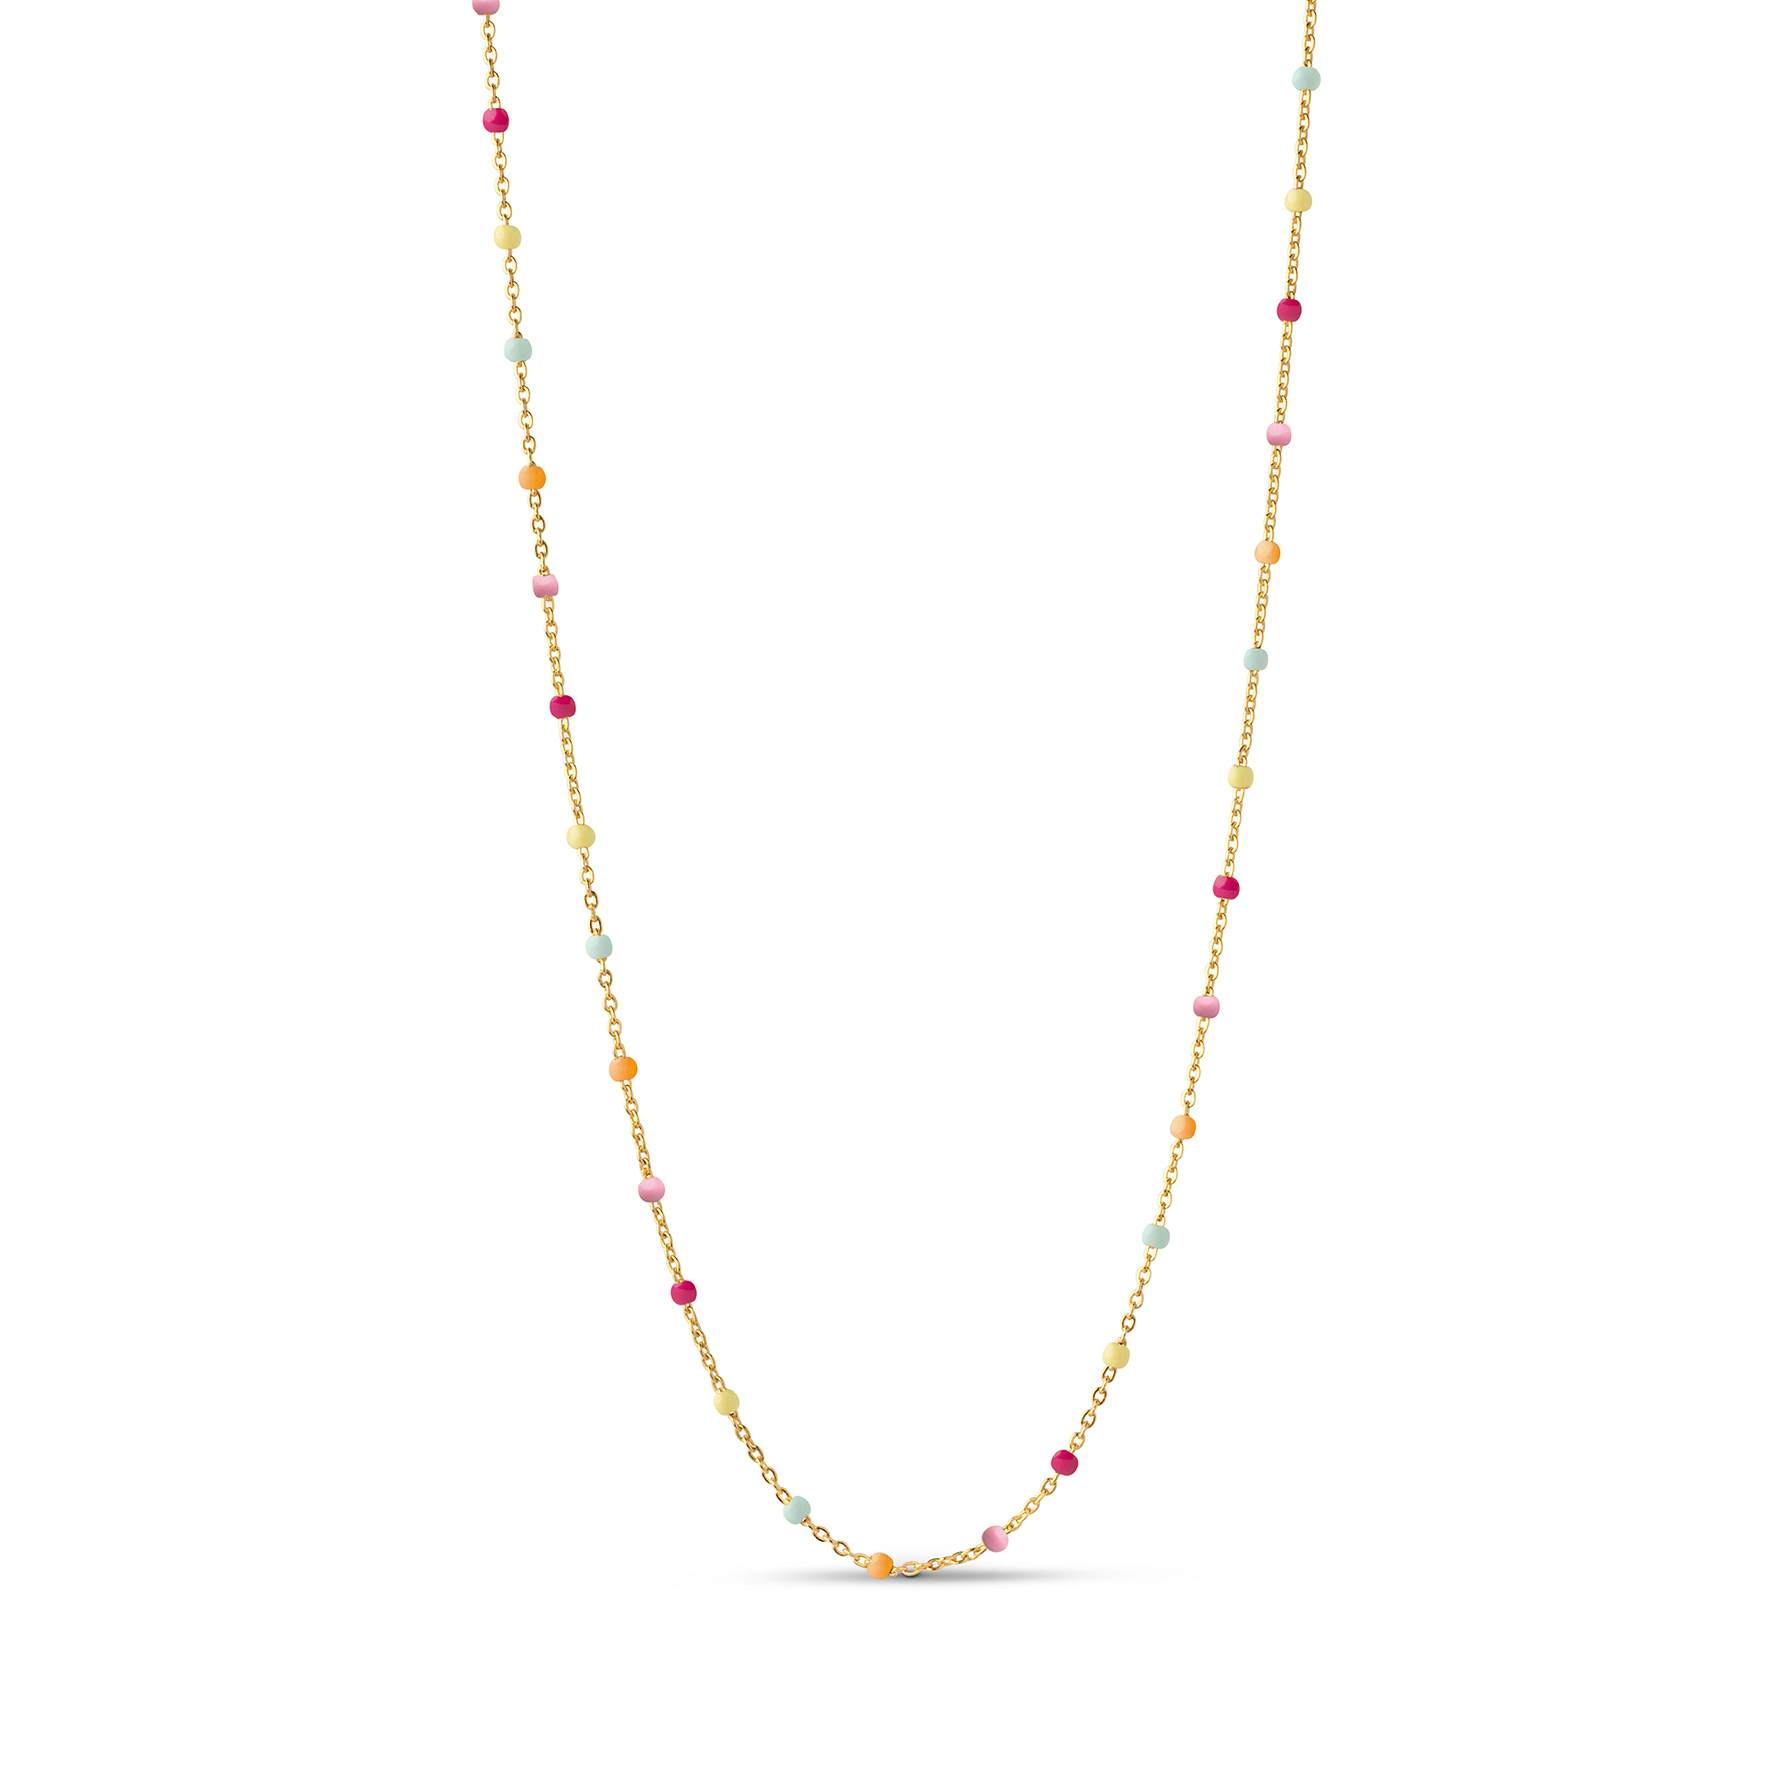 Lola Necklace Rainbow von Enamel Copenhagen in Vergoldet-Silber Sterling 925|Blank